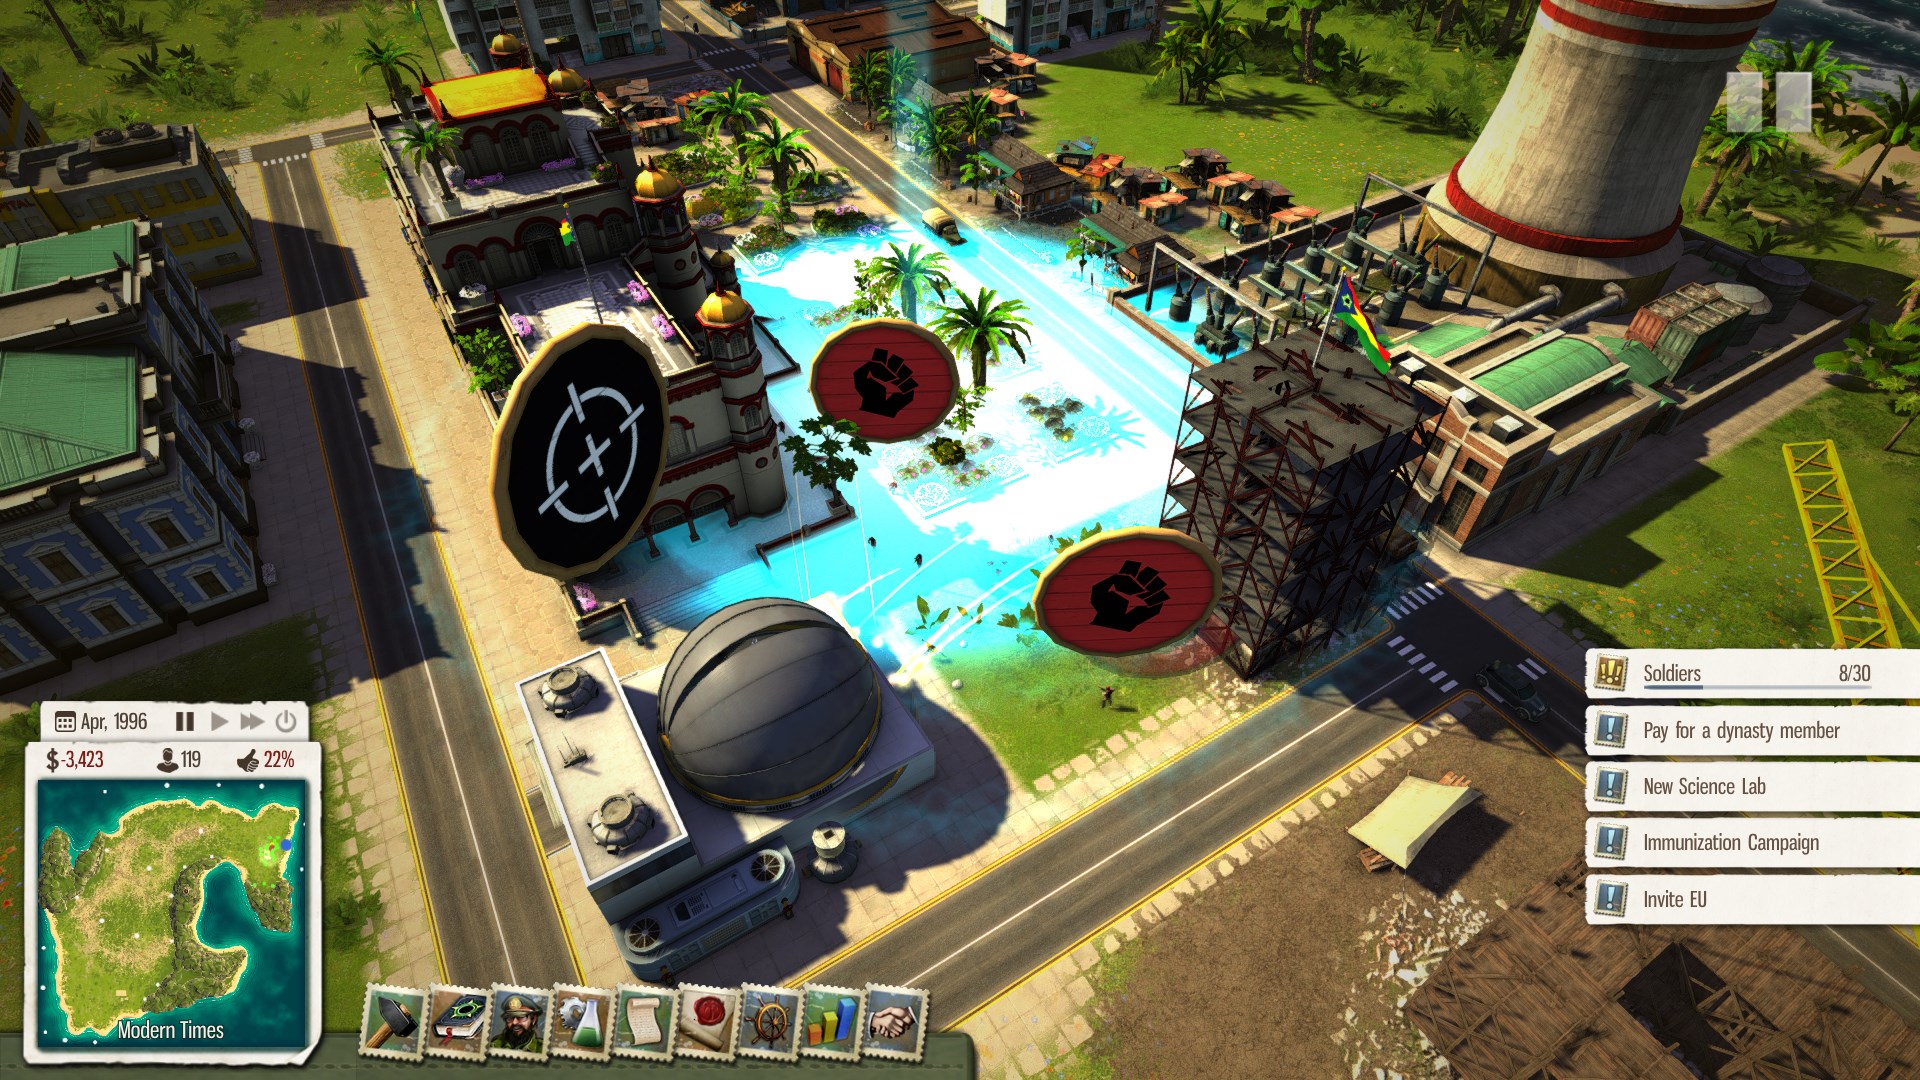 Buy Tropico 5 - Mad World (DLC) PC Steam key! Cheap price